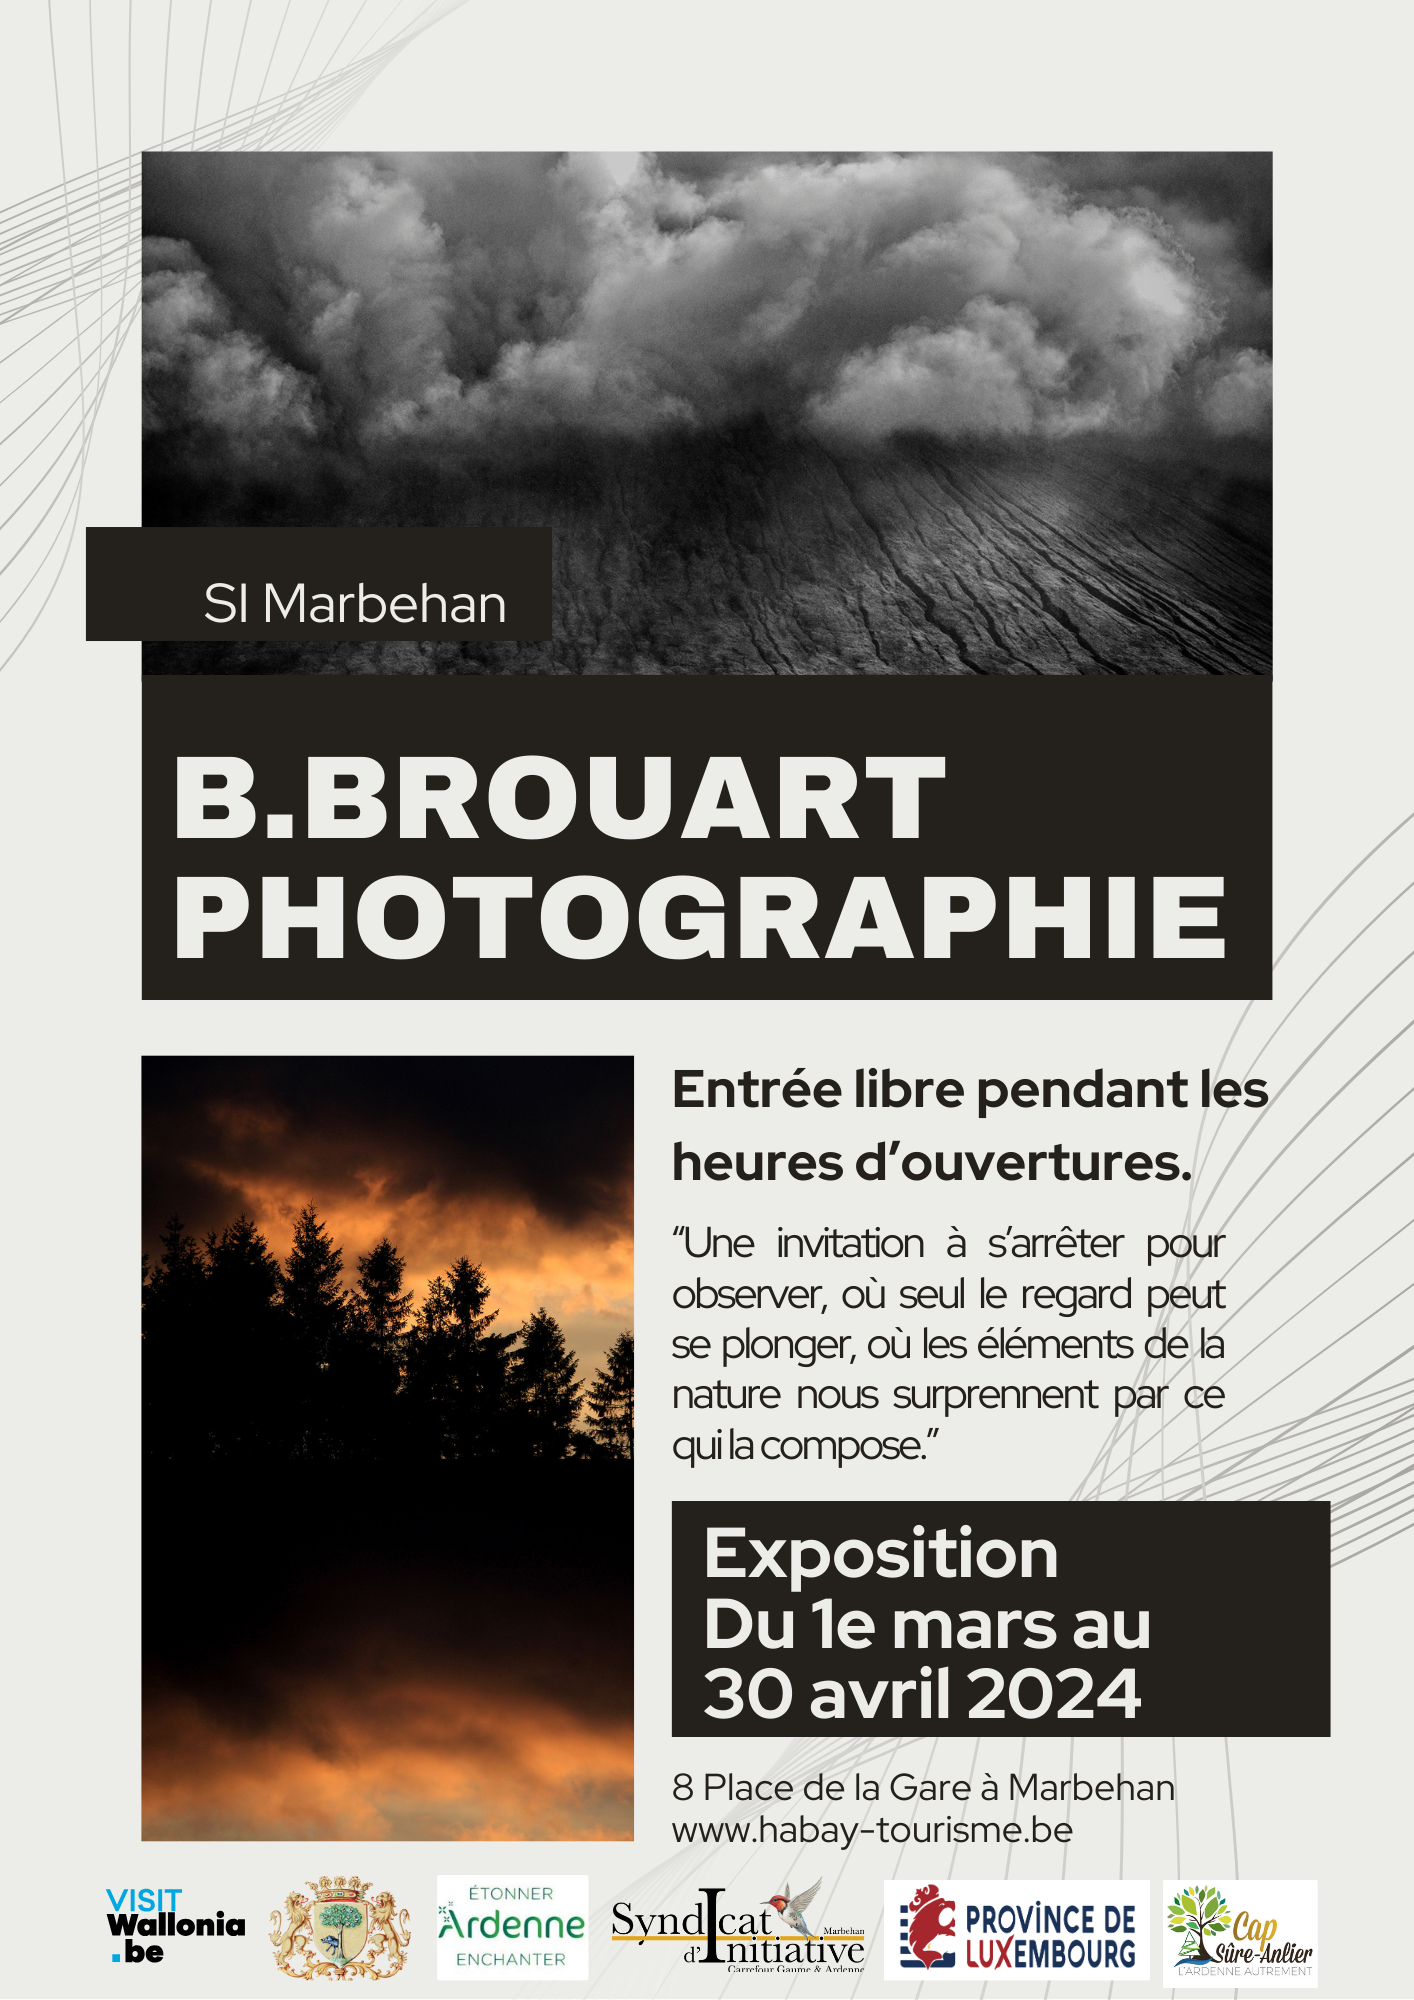 B.Brouart photography exhibition